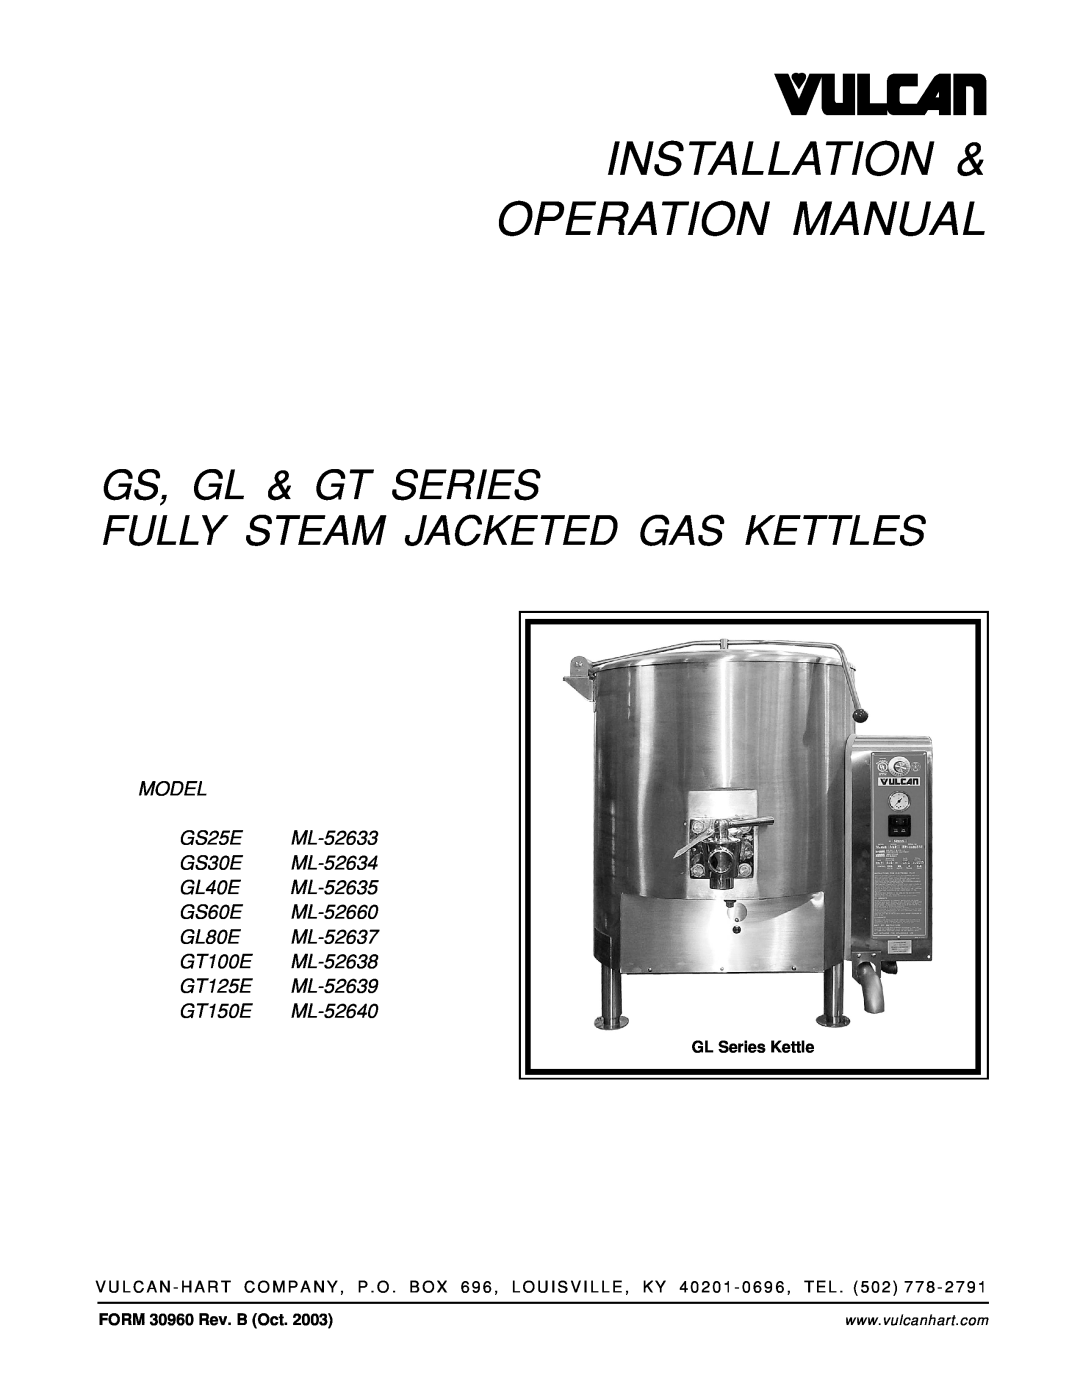 Vulcan-Hart GS60E ML-52660 operation manual Gs, Gl & Gt Series Fully Steam Jacketed Gas Kettles, GL Series Kettle 